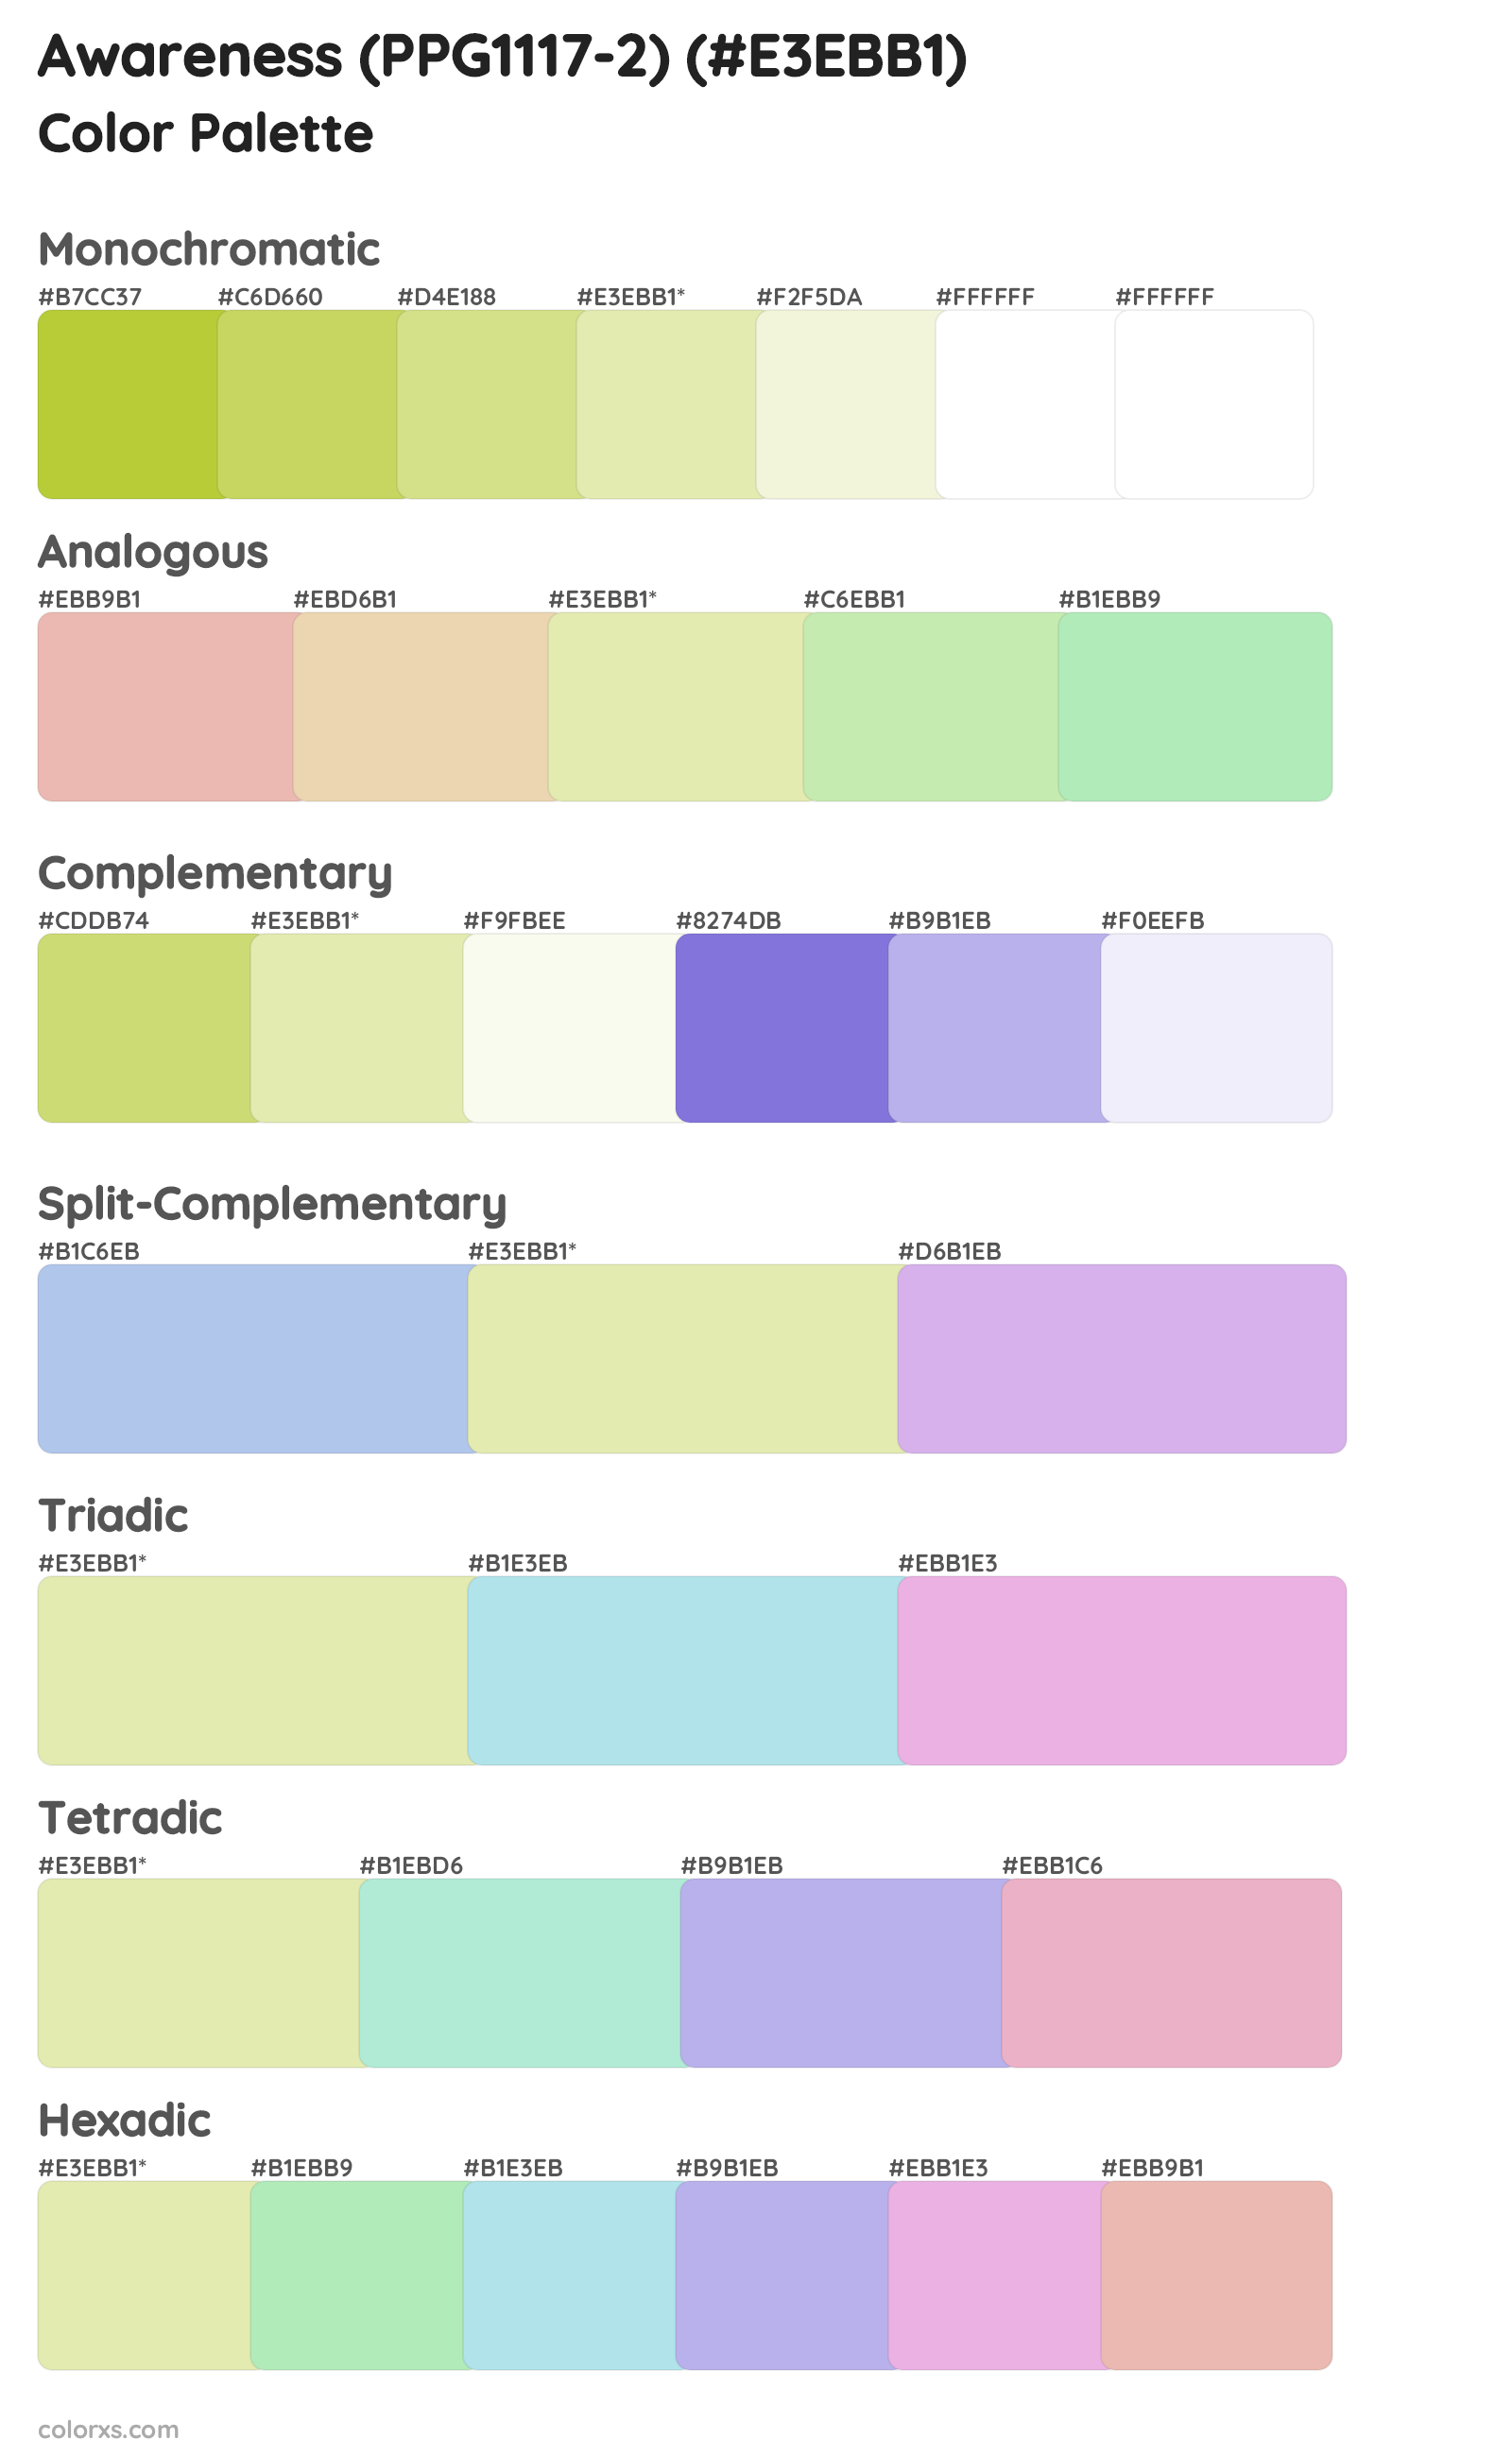 Awareness (PPG1117-2) Color Scheme Palettes